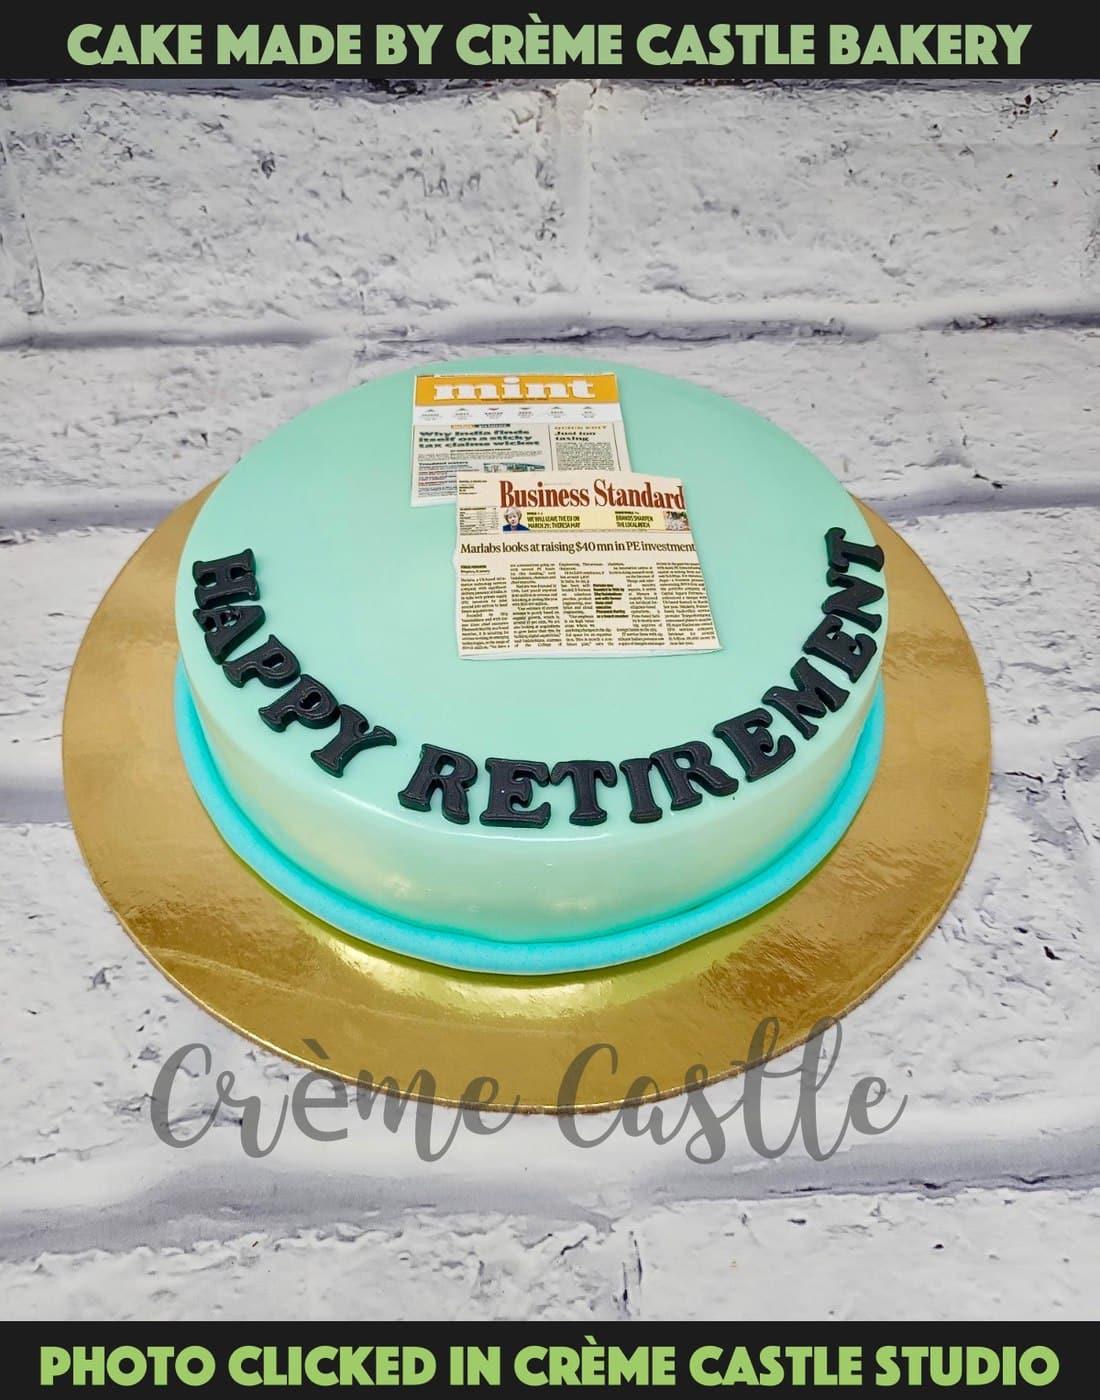 2 Tier Retirement Cake | bakehoney.com